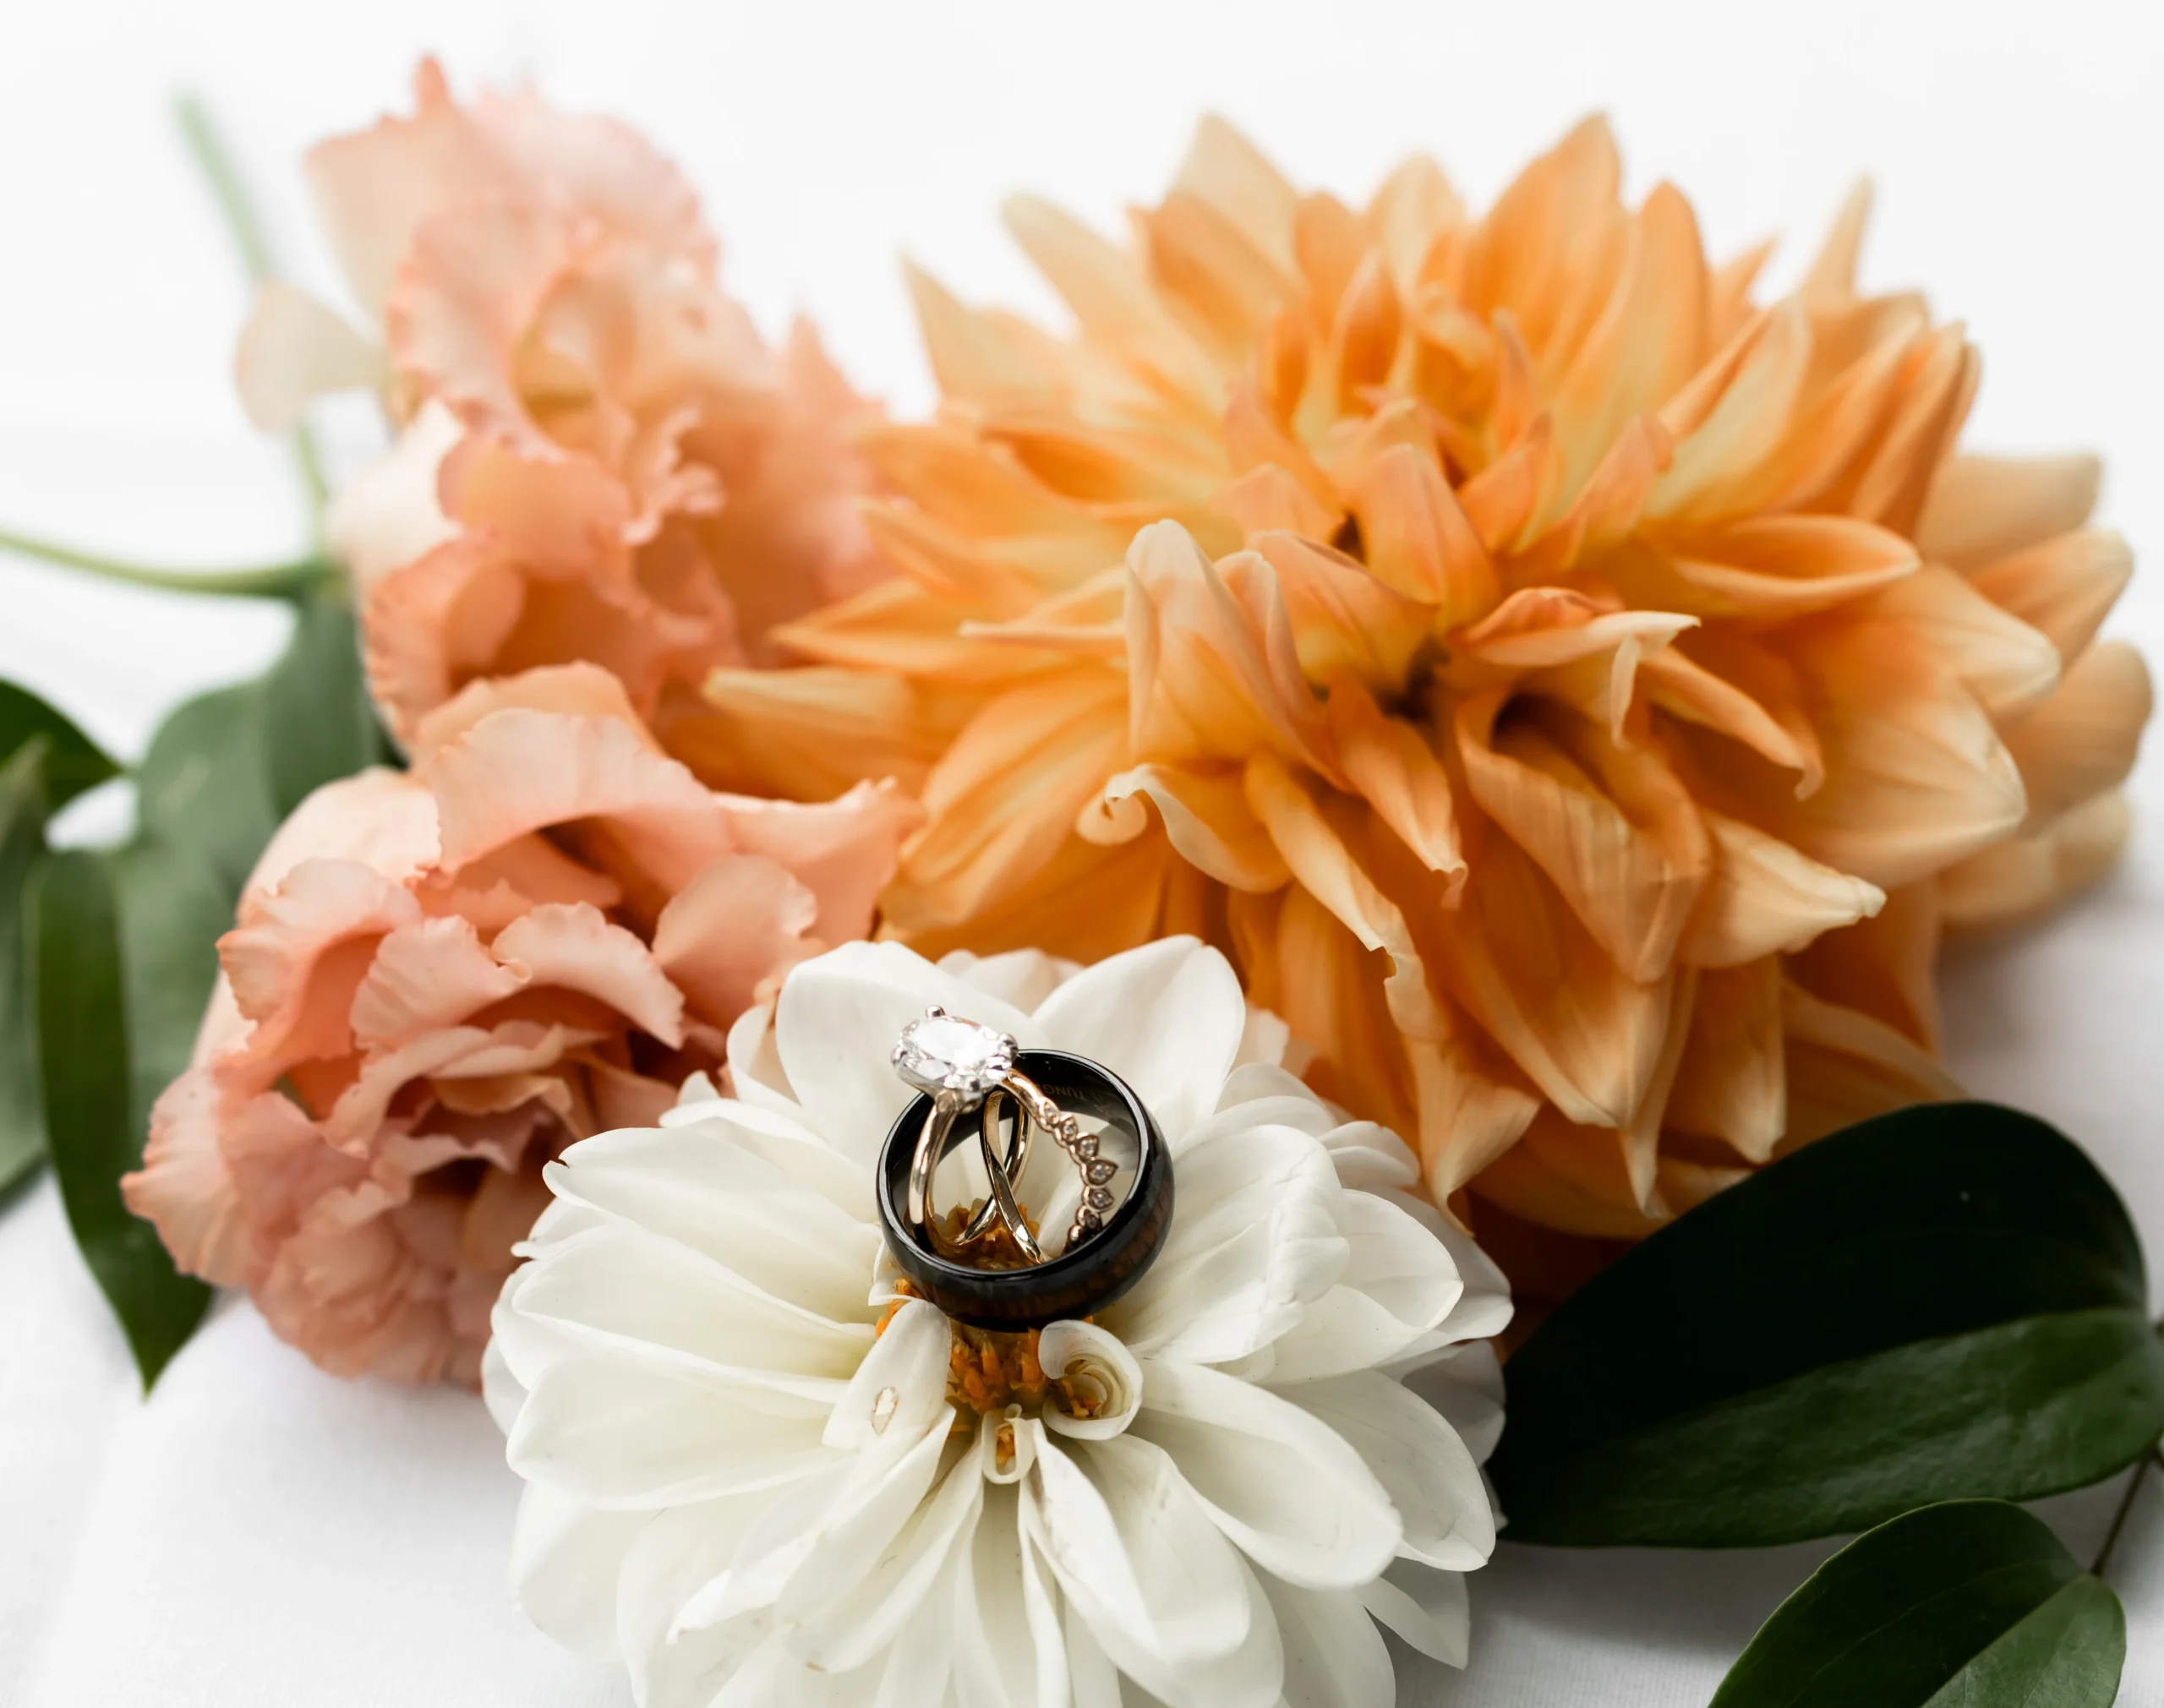 rings sitting on a flower arrangement